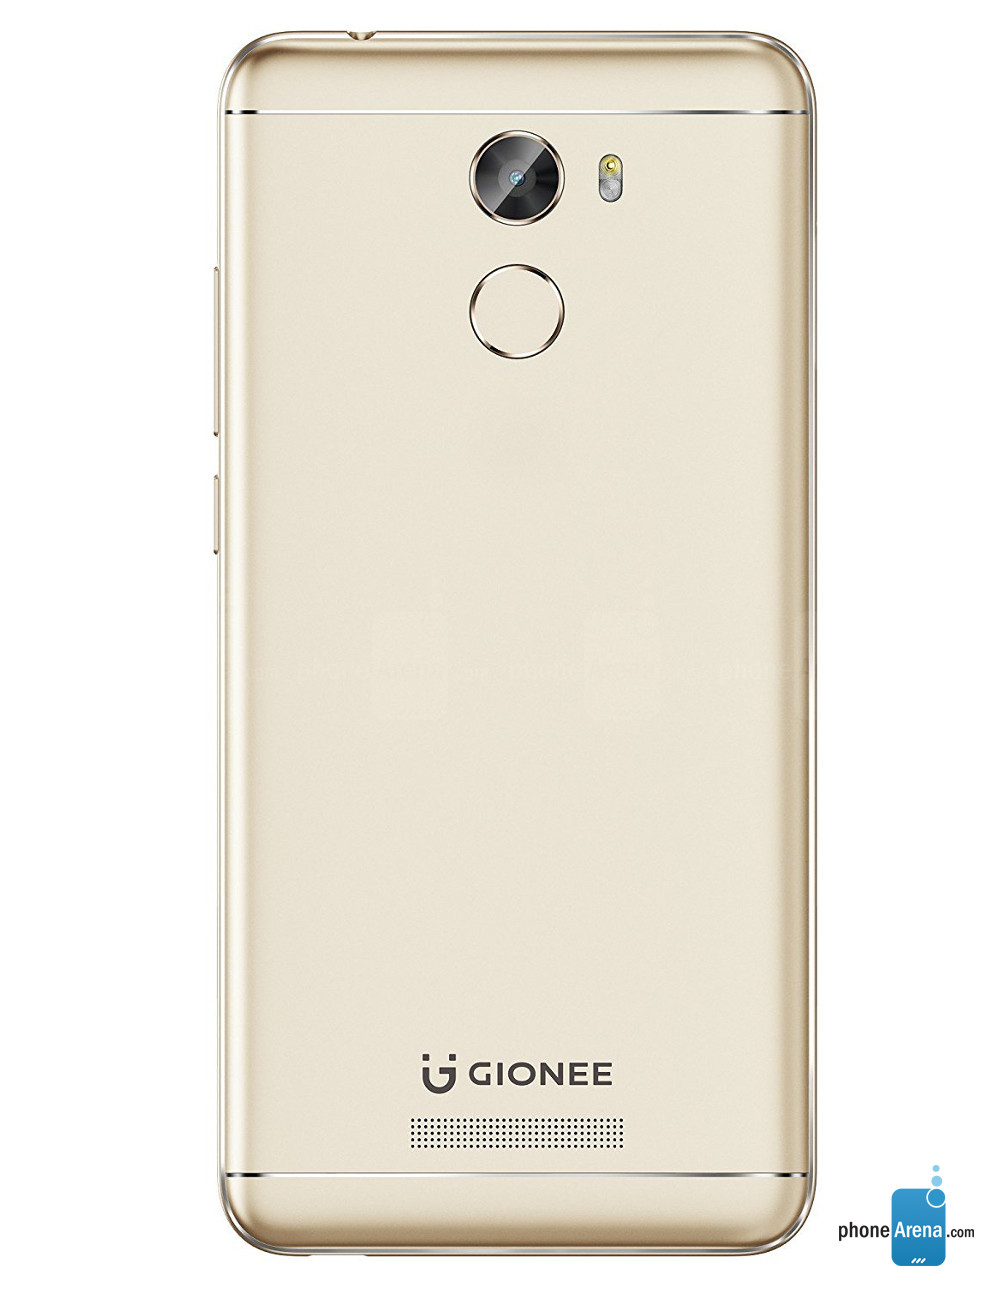 gionee phone price